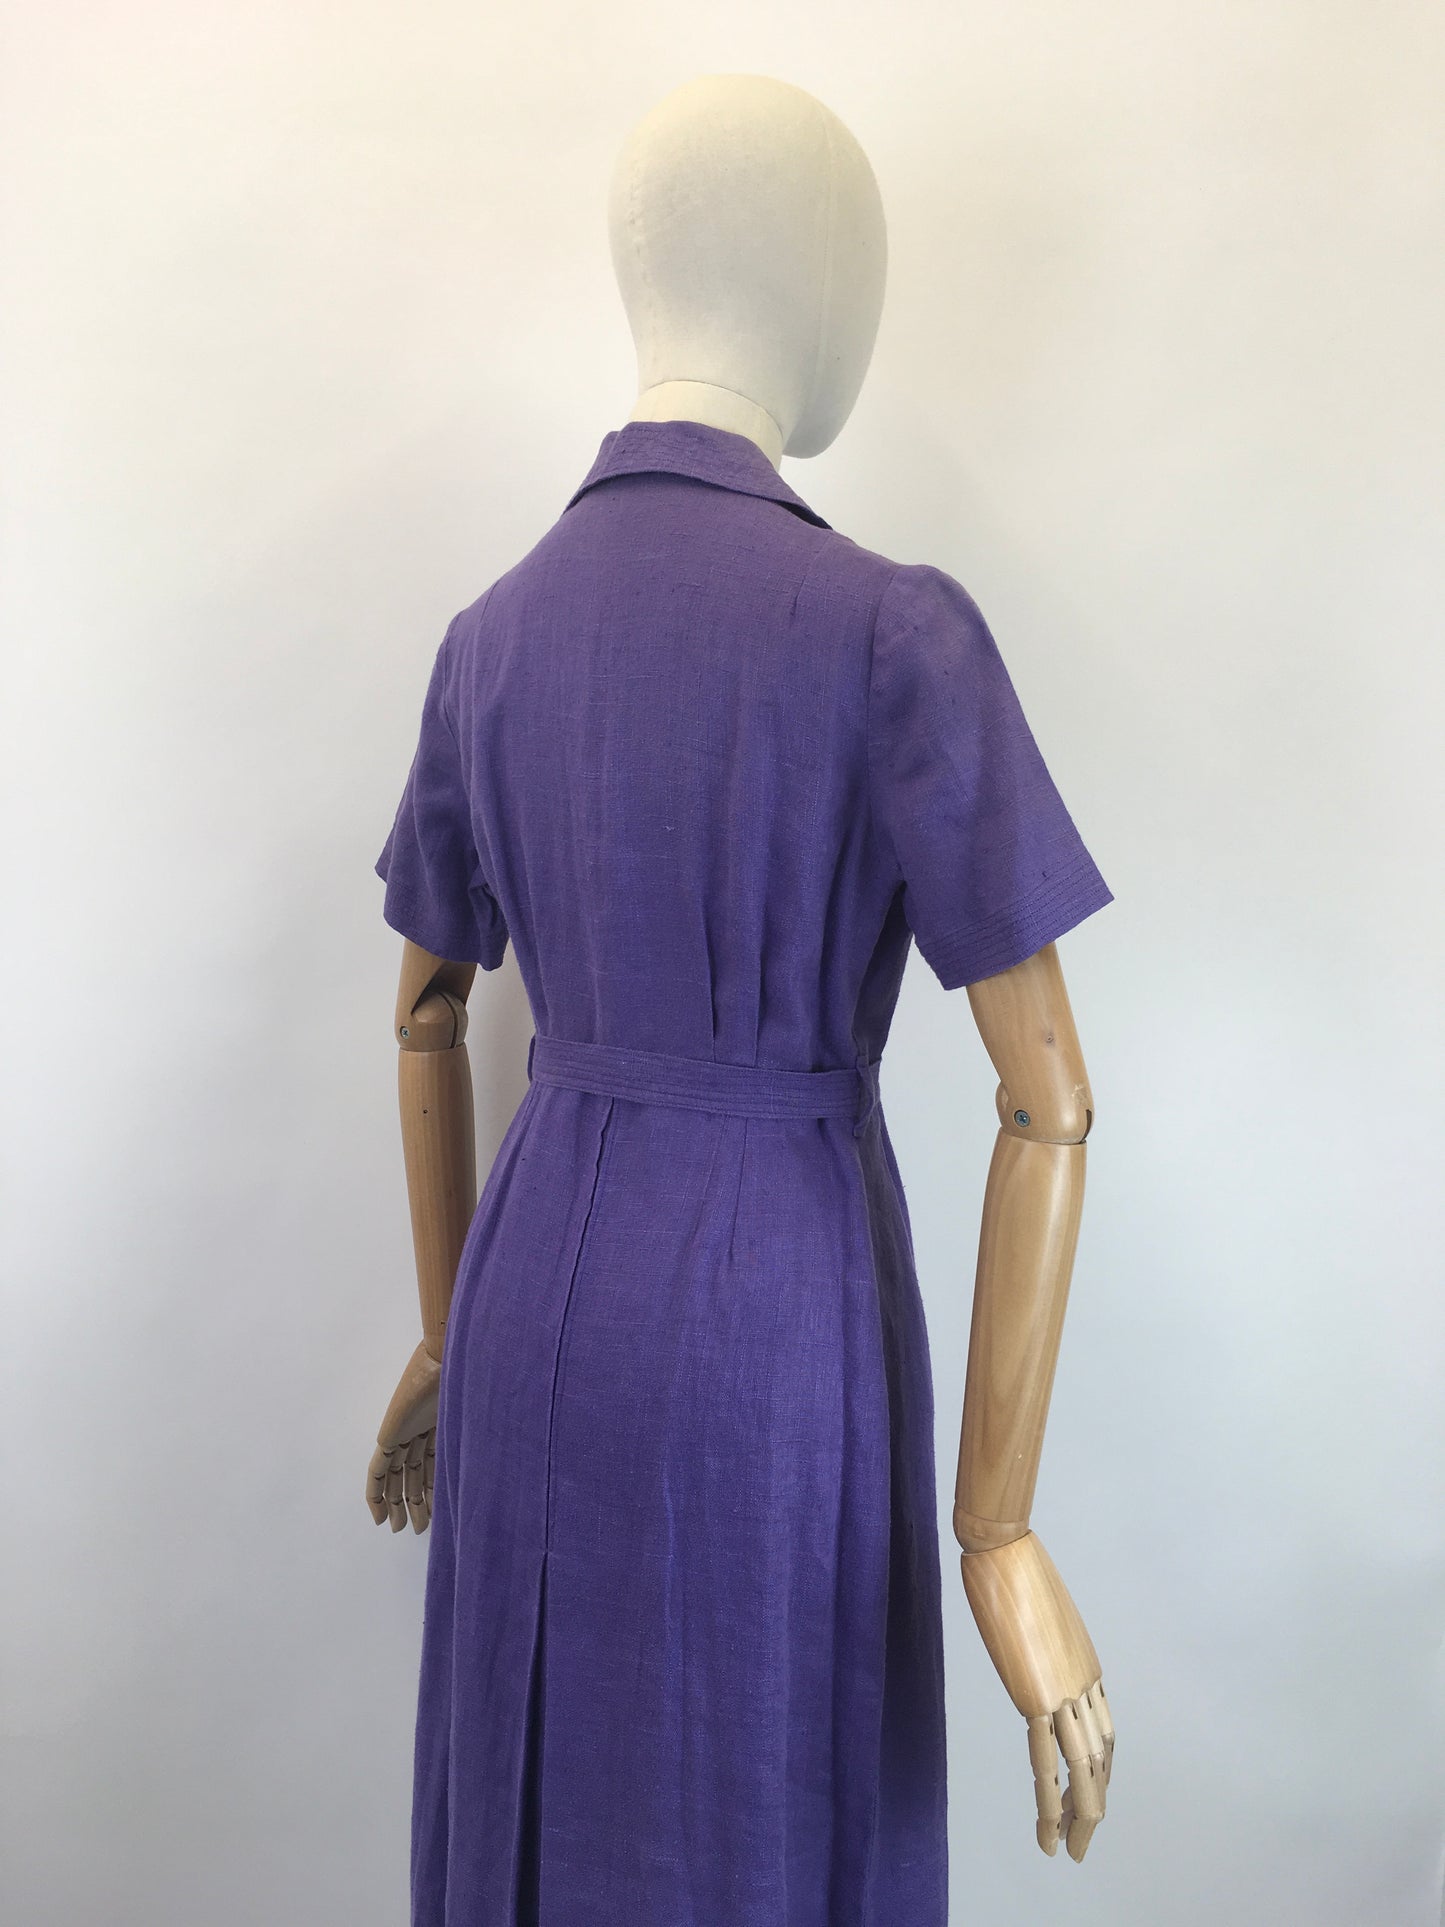 Original 1940’s Fabulous Linen Dress - In A Warm Purple with Stunning Details